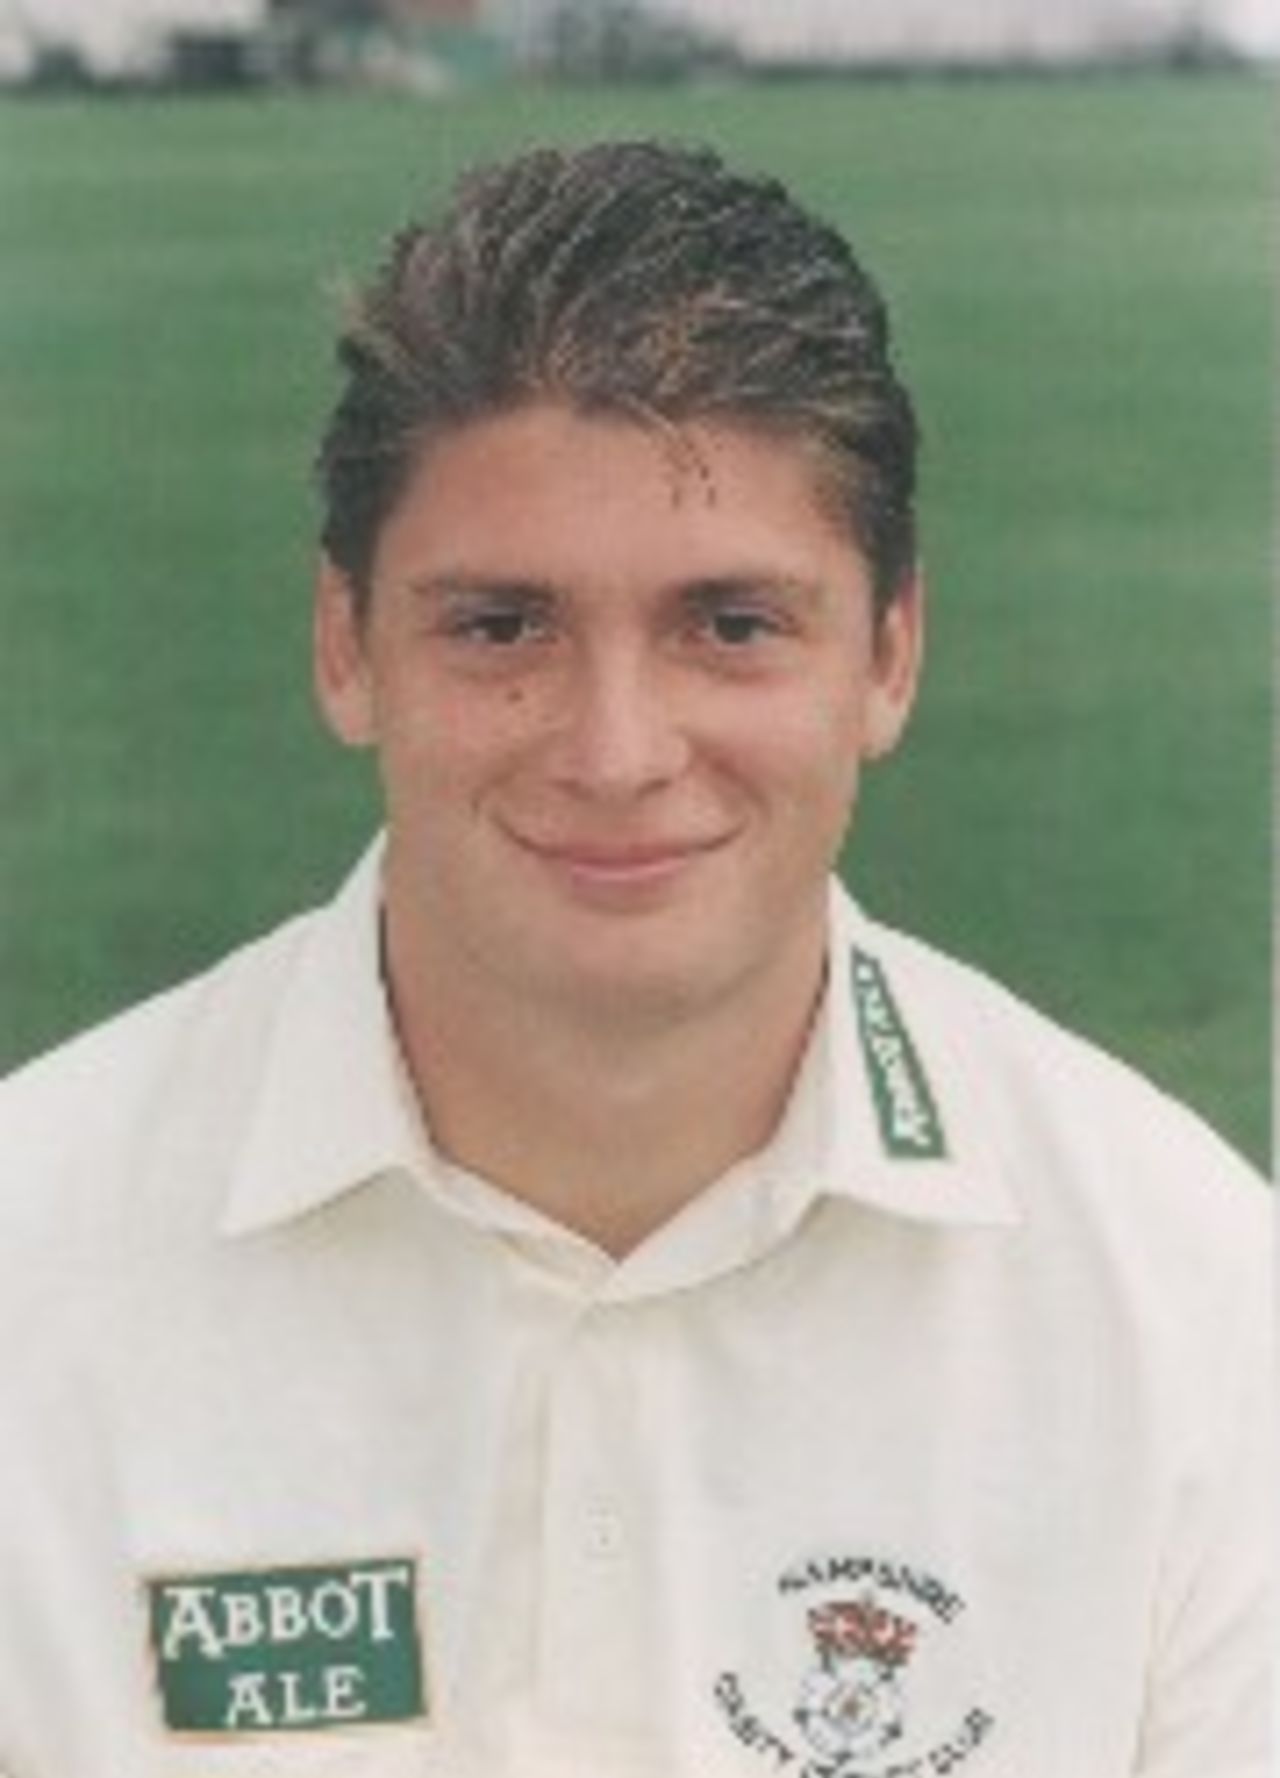 Simon Renshaw (Hampshire bowler)